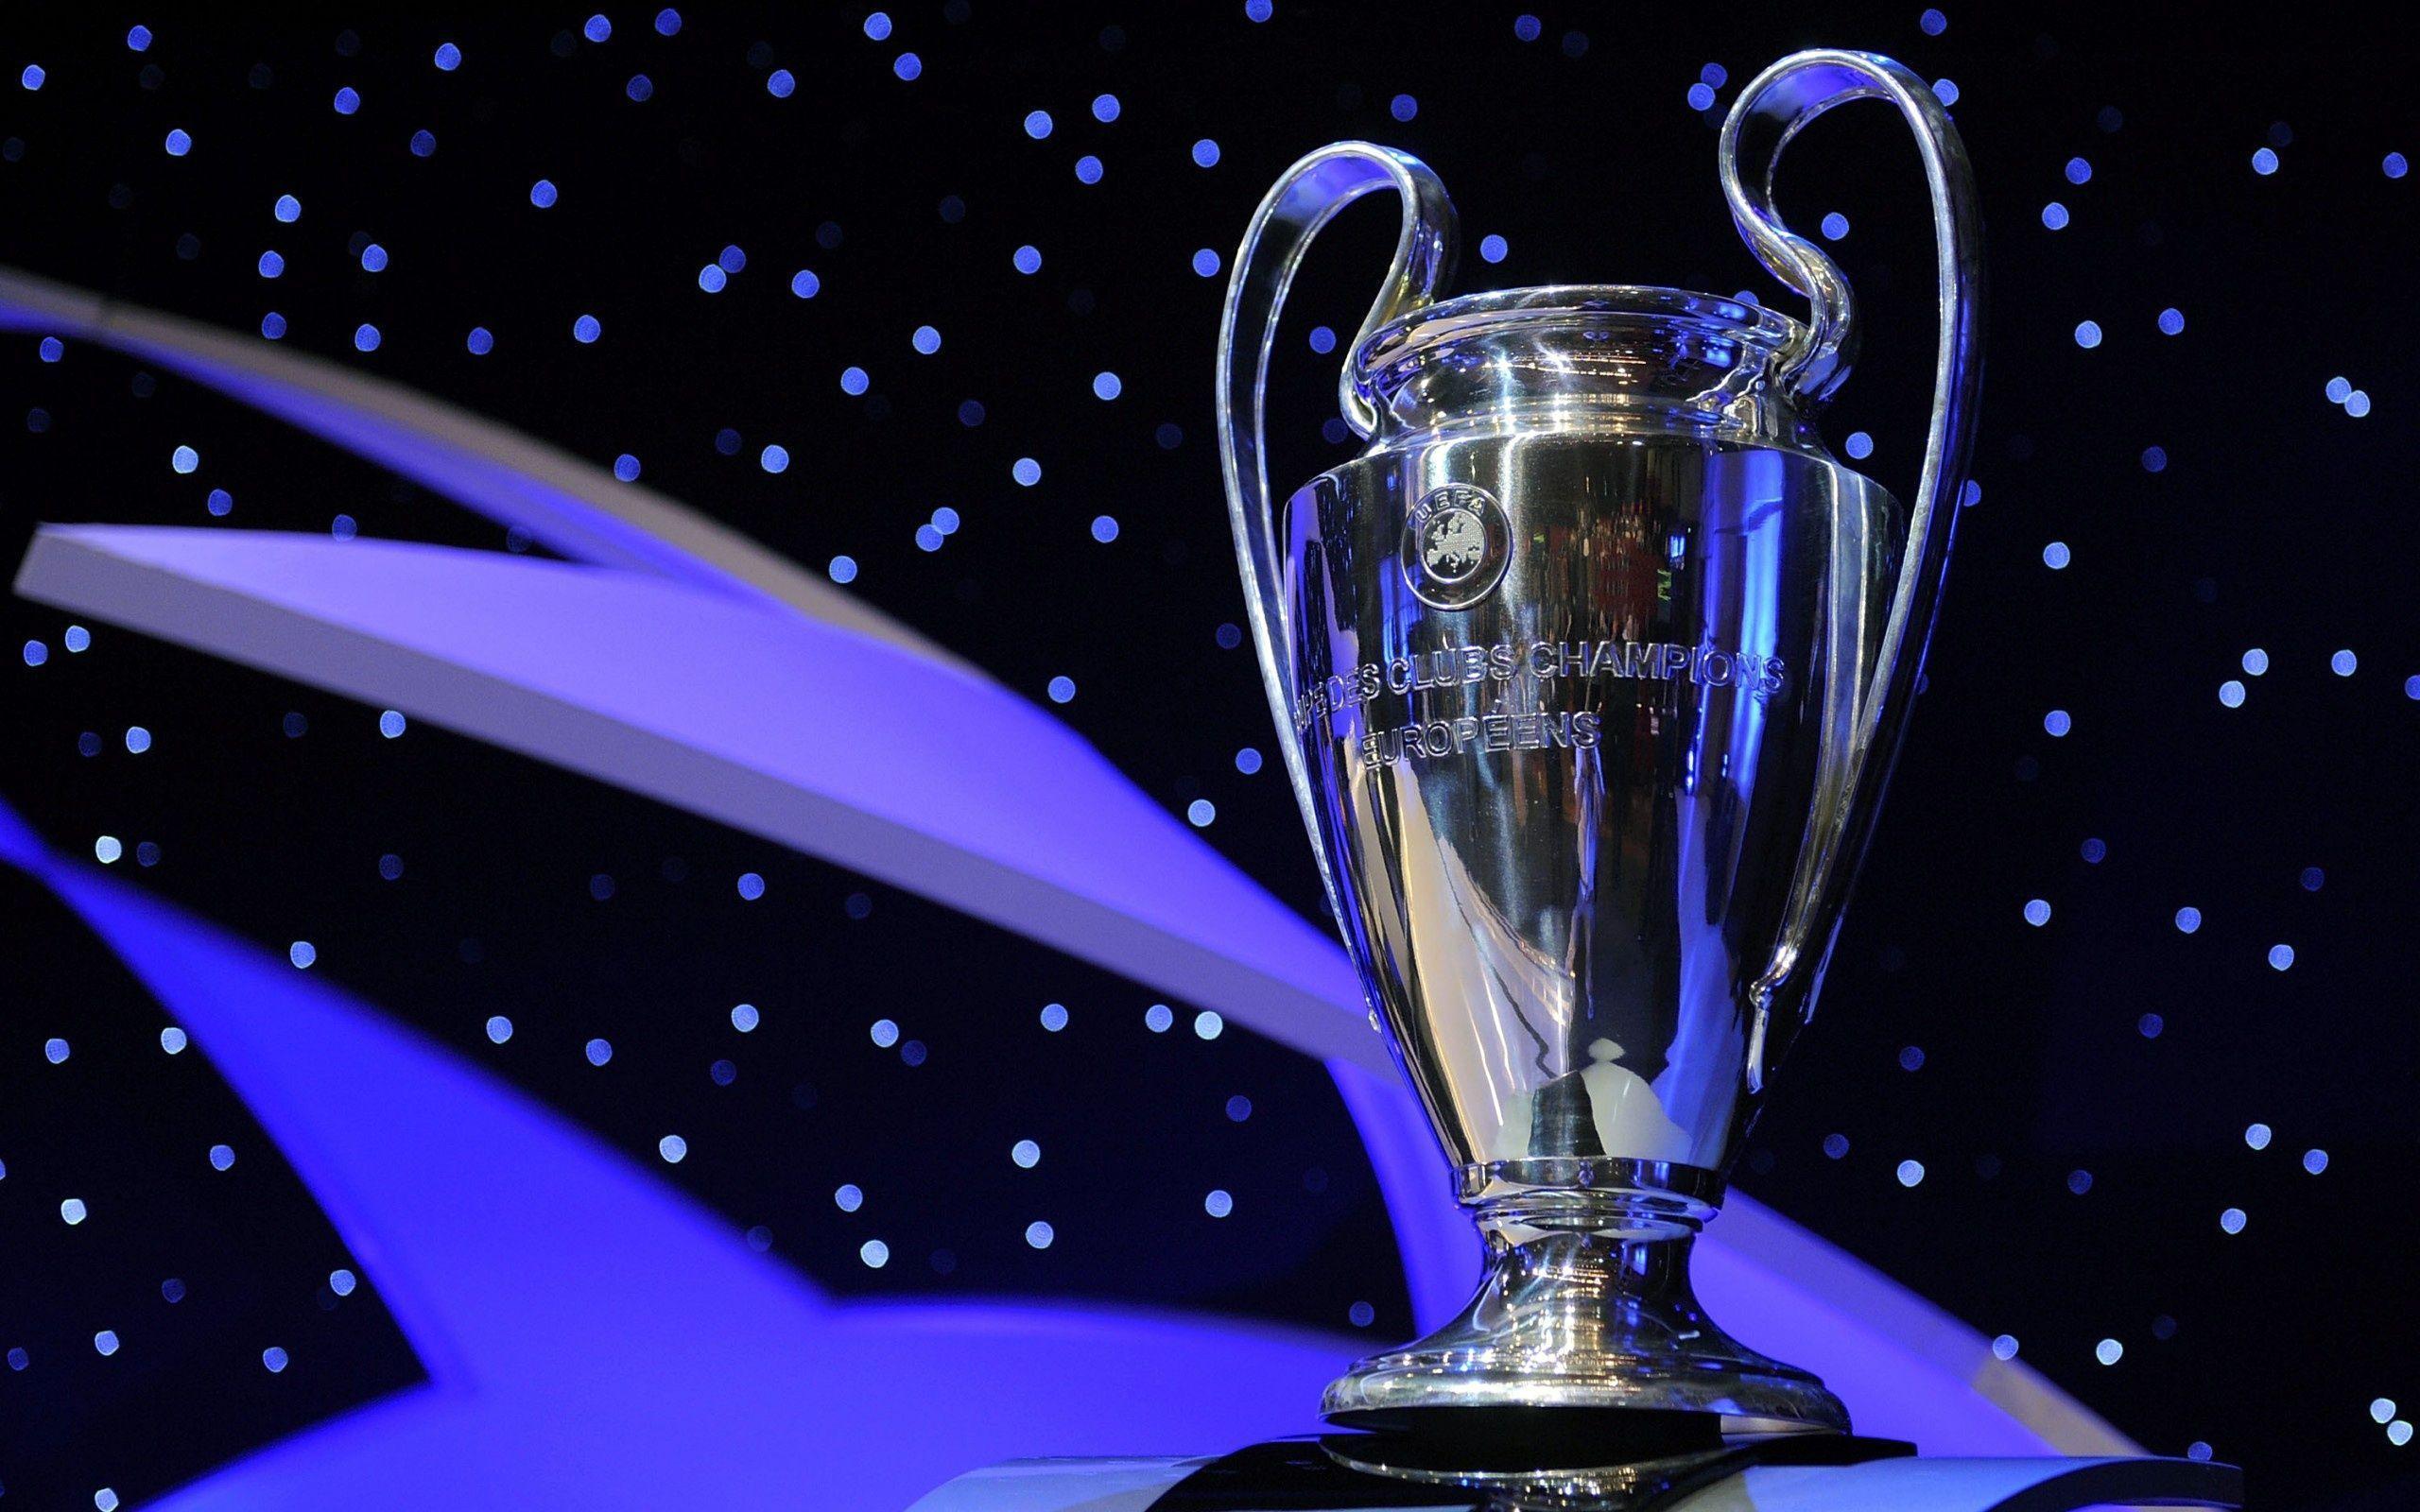 UEFA Champions League HD Image, Get Free top quality UEFA